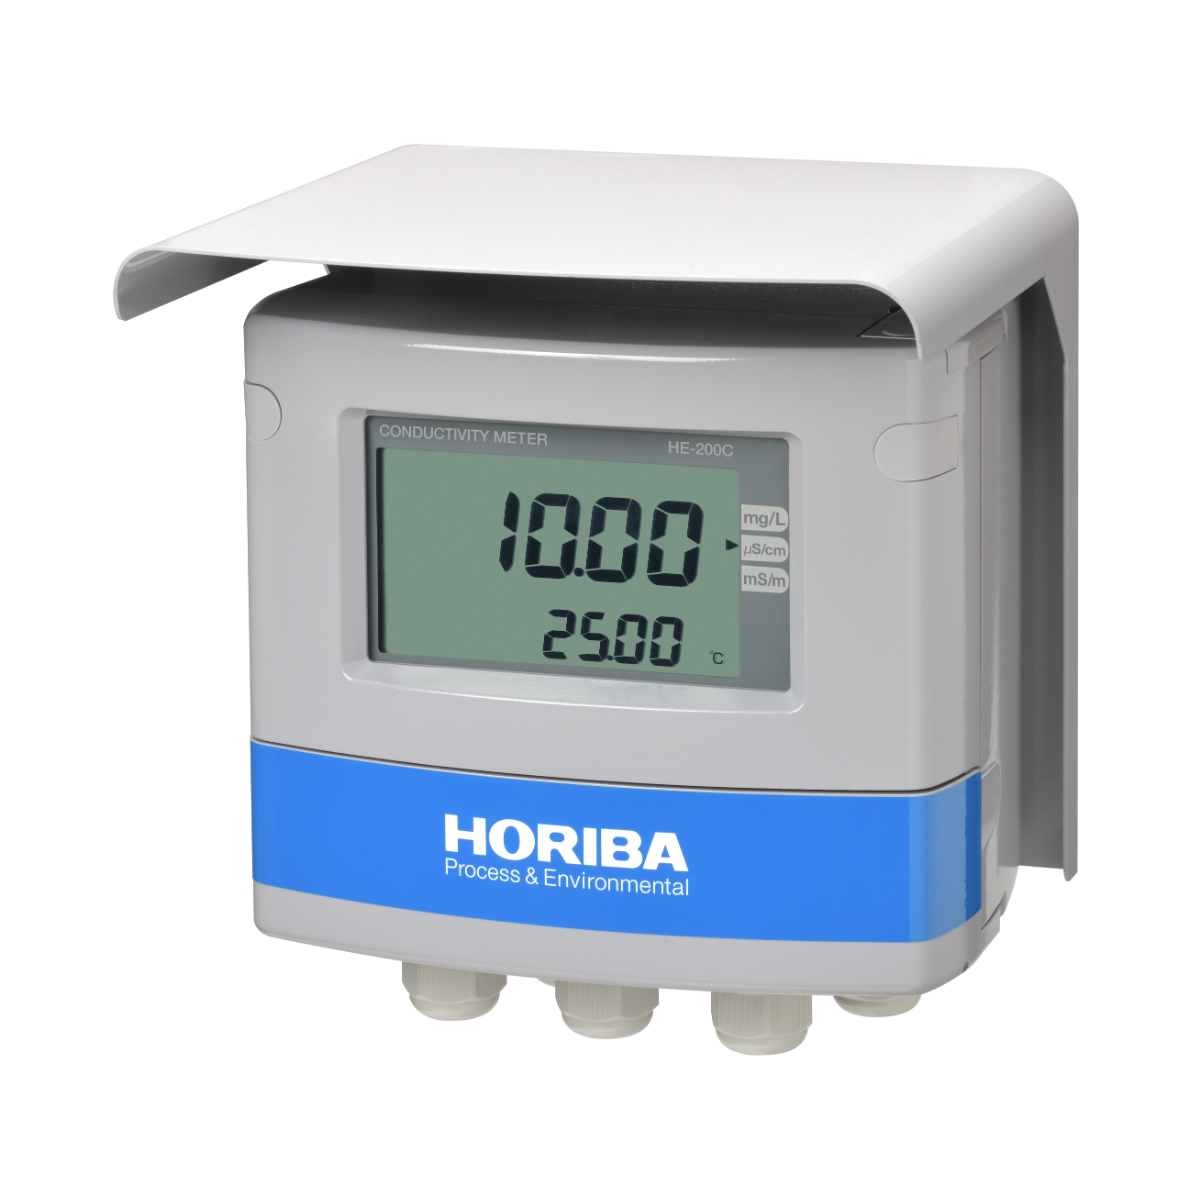 https://static.horiba.com/fileadmin/Horiba/Products/Process_and_Environmental/Process_Water/H-1_Series/HE-200C/HE-200C_01.png